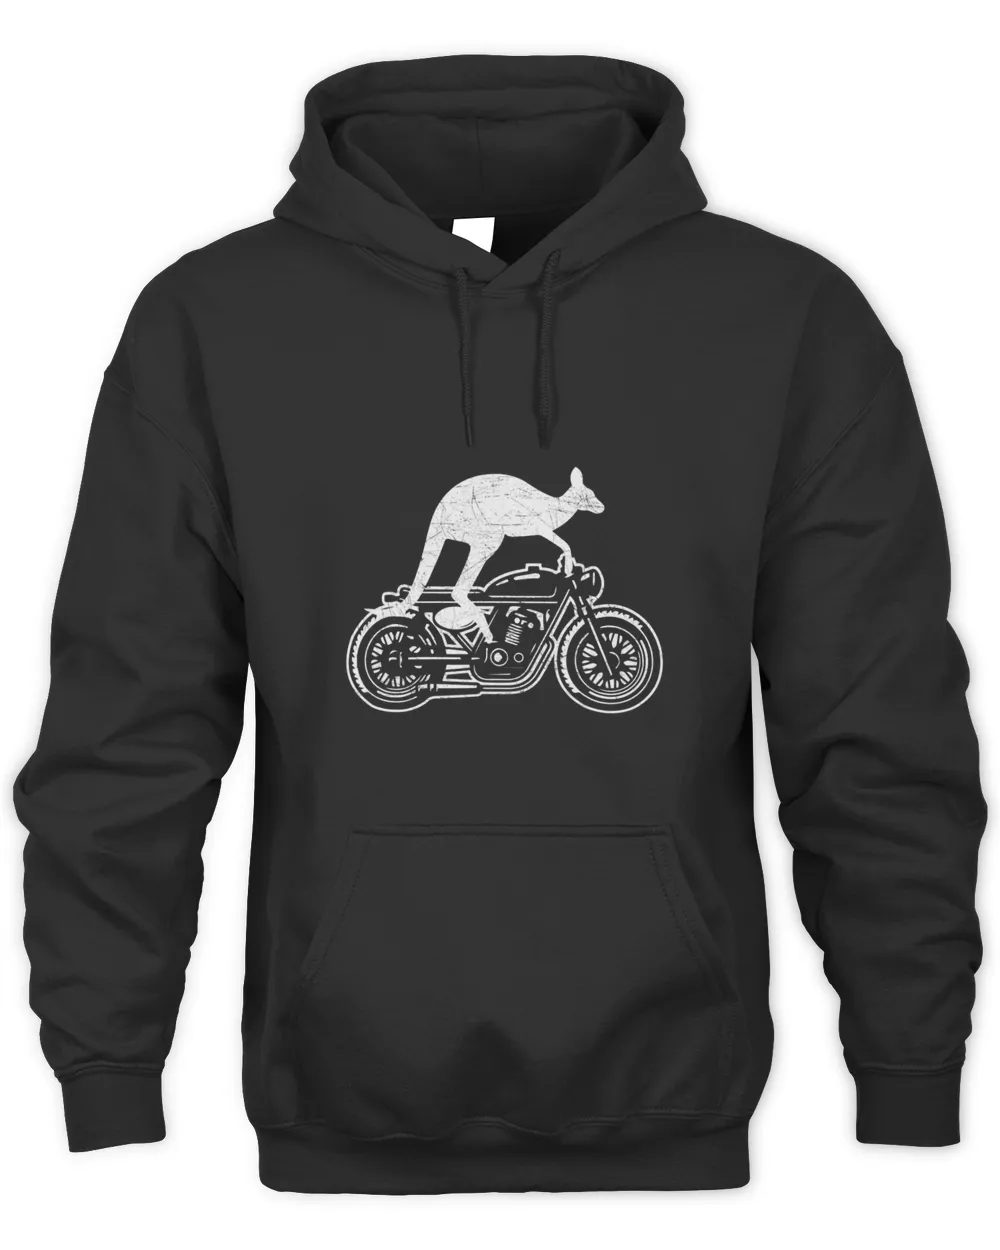 Kangaroo Gift Riding Motorbike Australia Motorcycle Bikers Funny